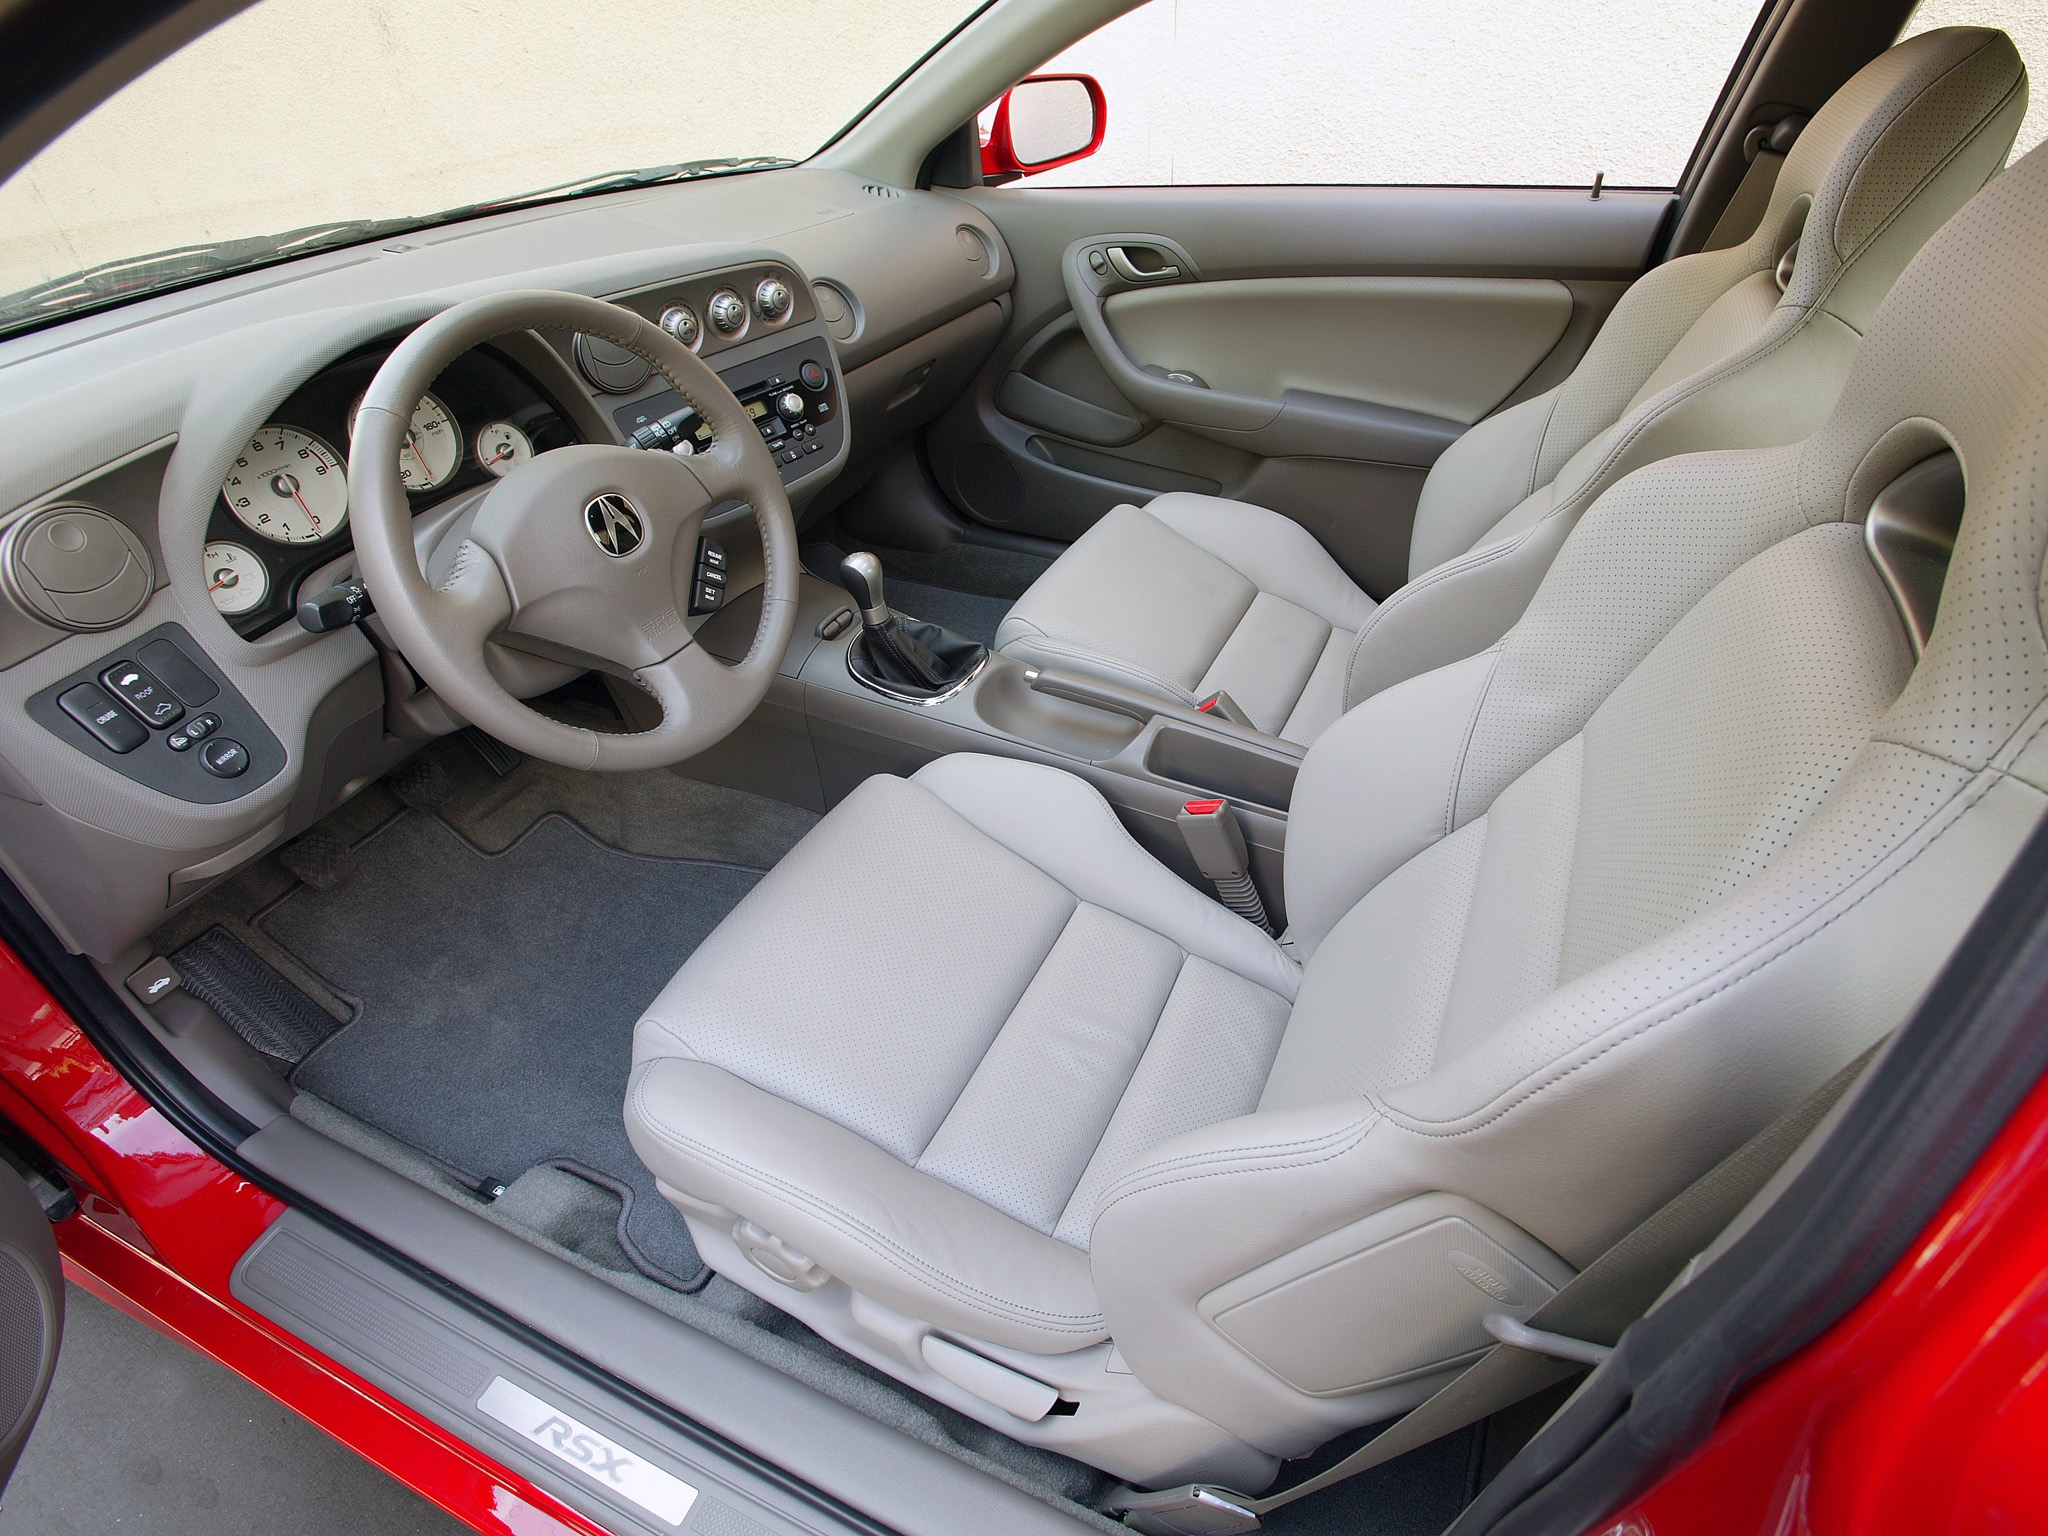 acura, interior, cars, rsx, steering wheel, rudder, salon, speedometer, 2006 1080p